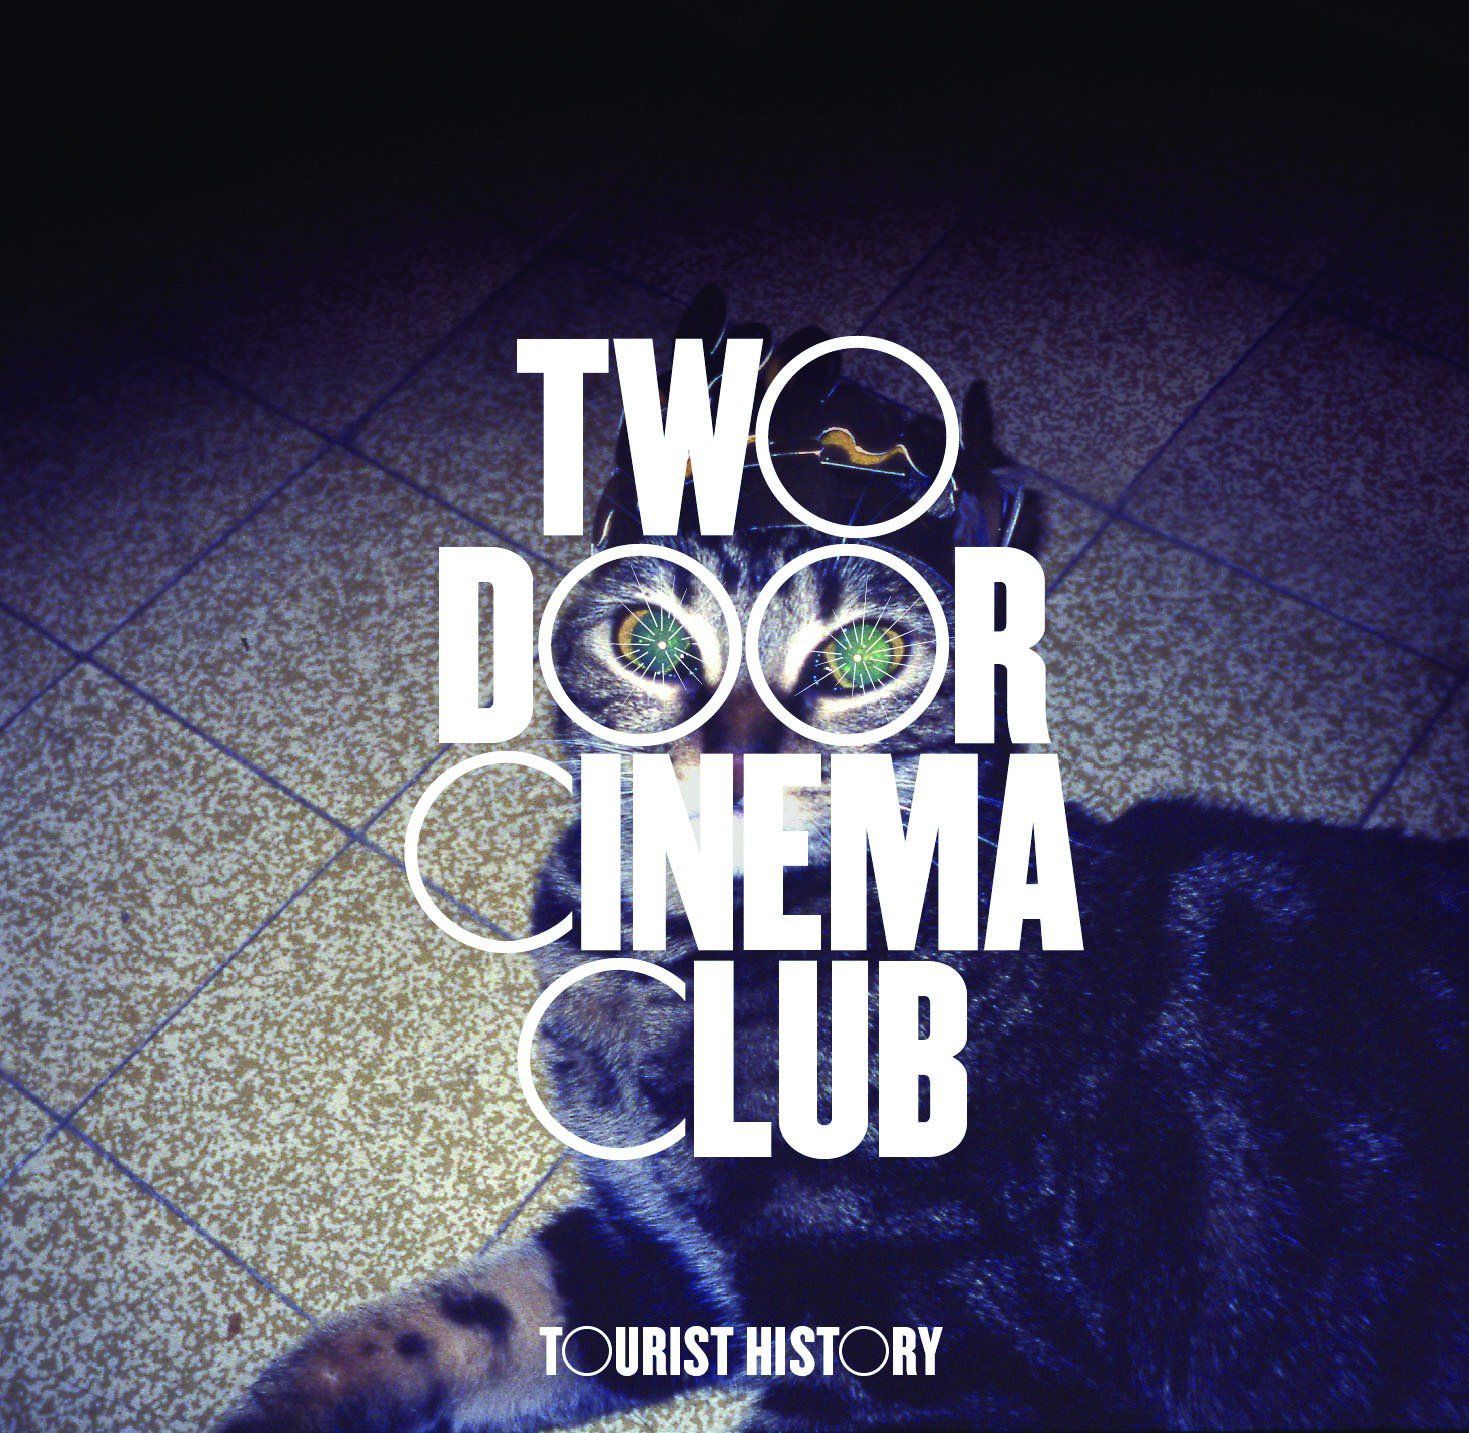 “Tourist History” dos Two Door Cinema Club celebra 10 anos